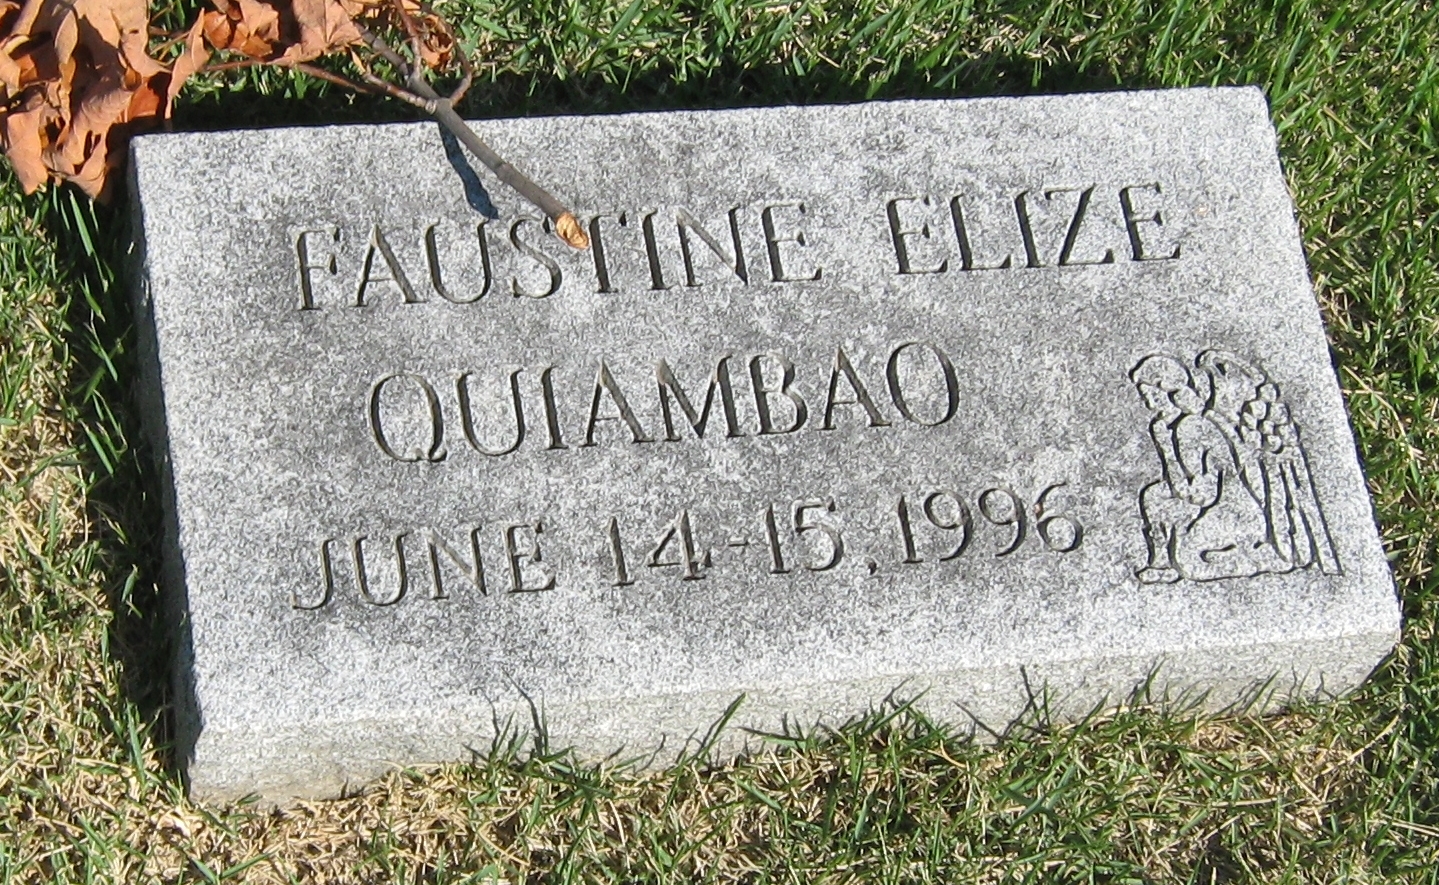 Faustine Elize Quiambao